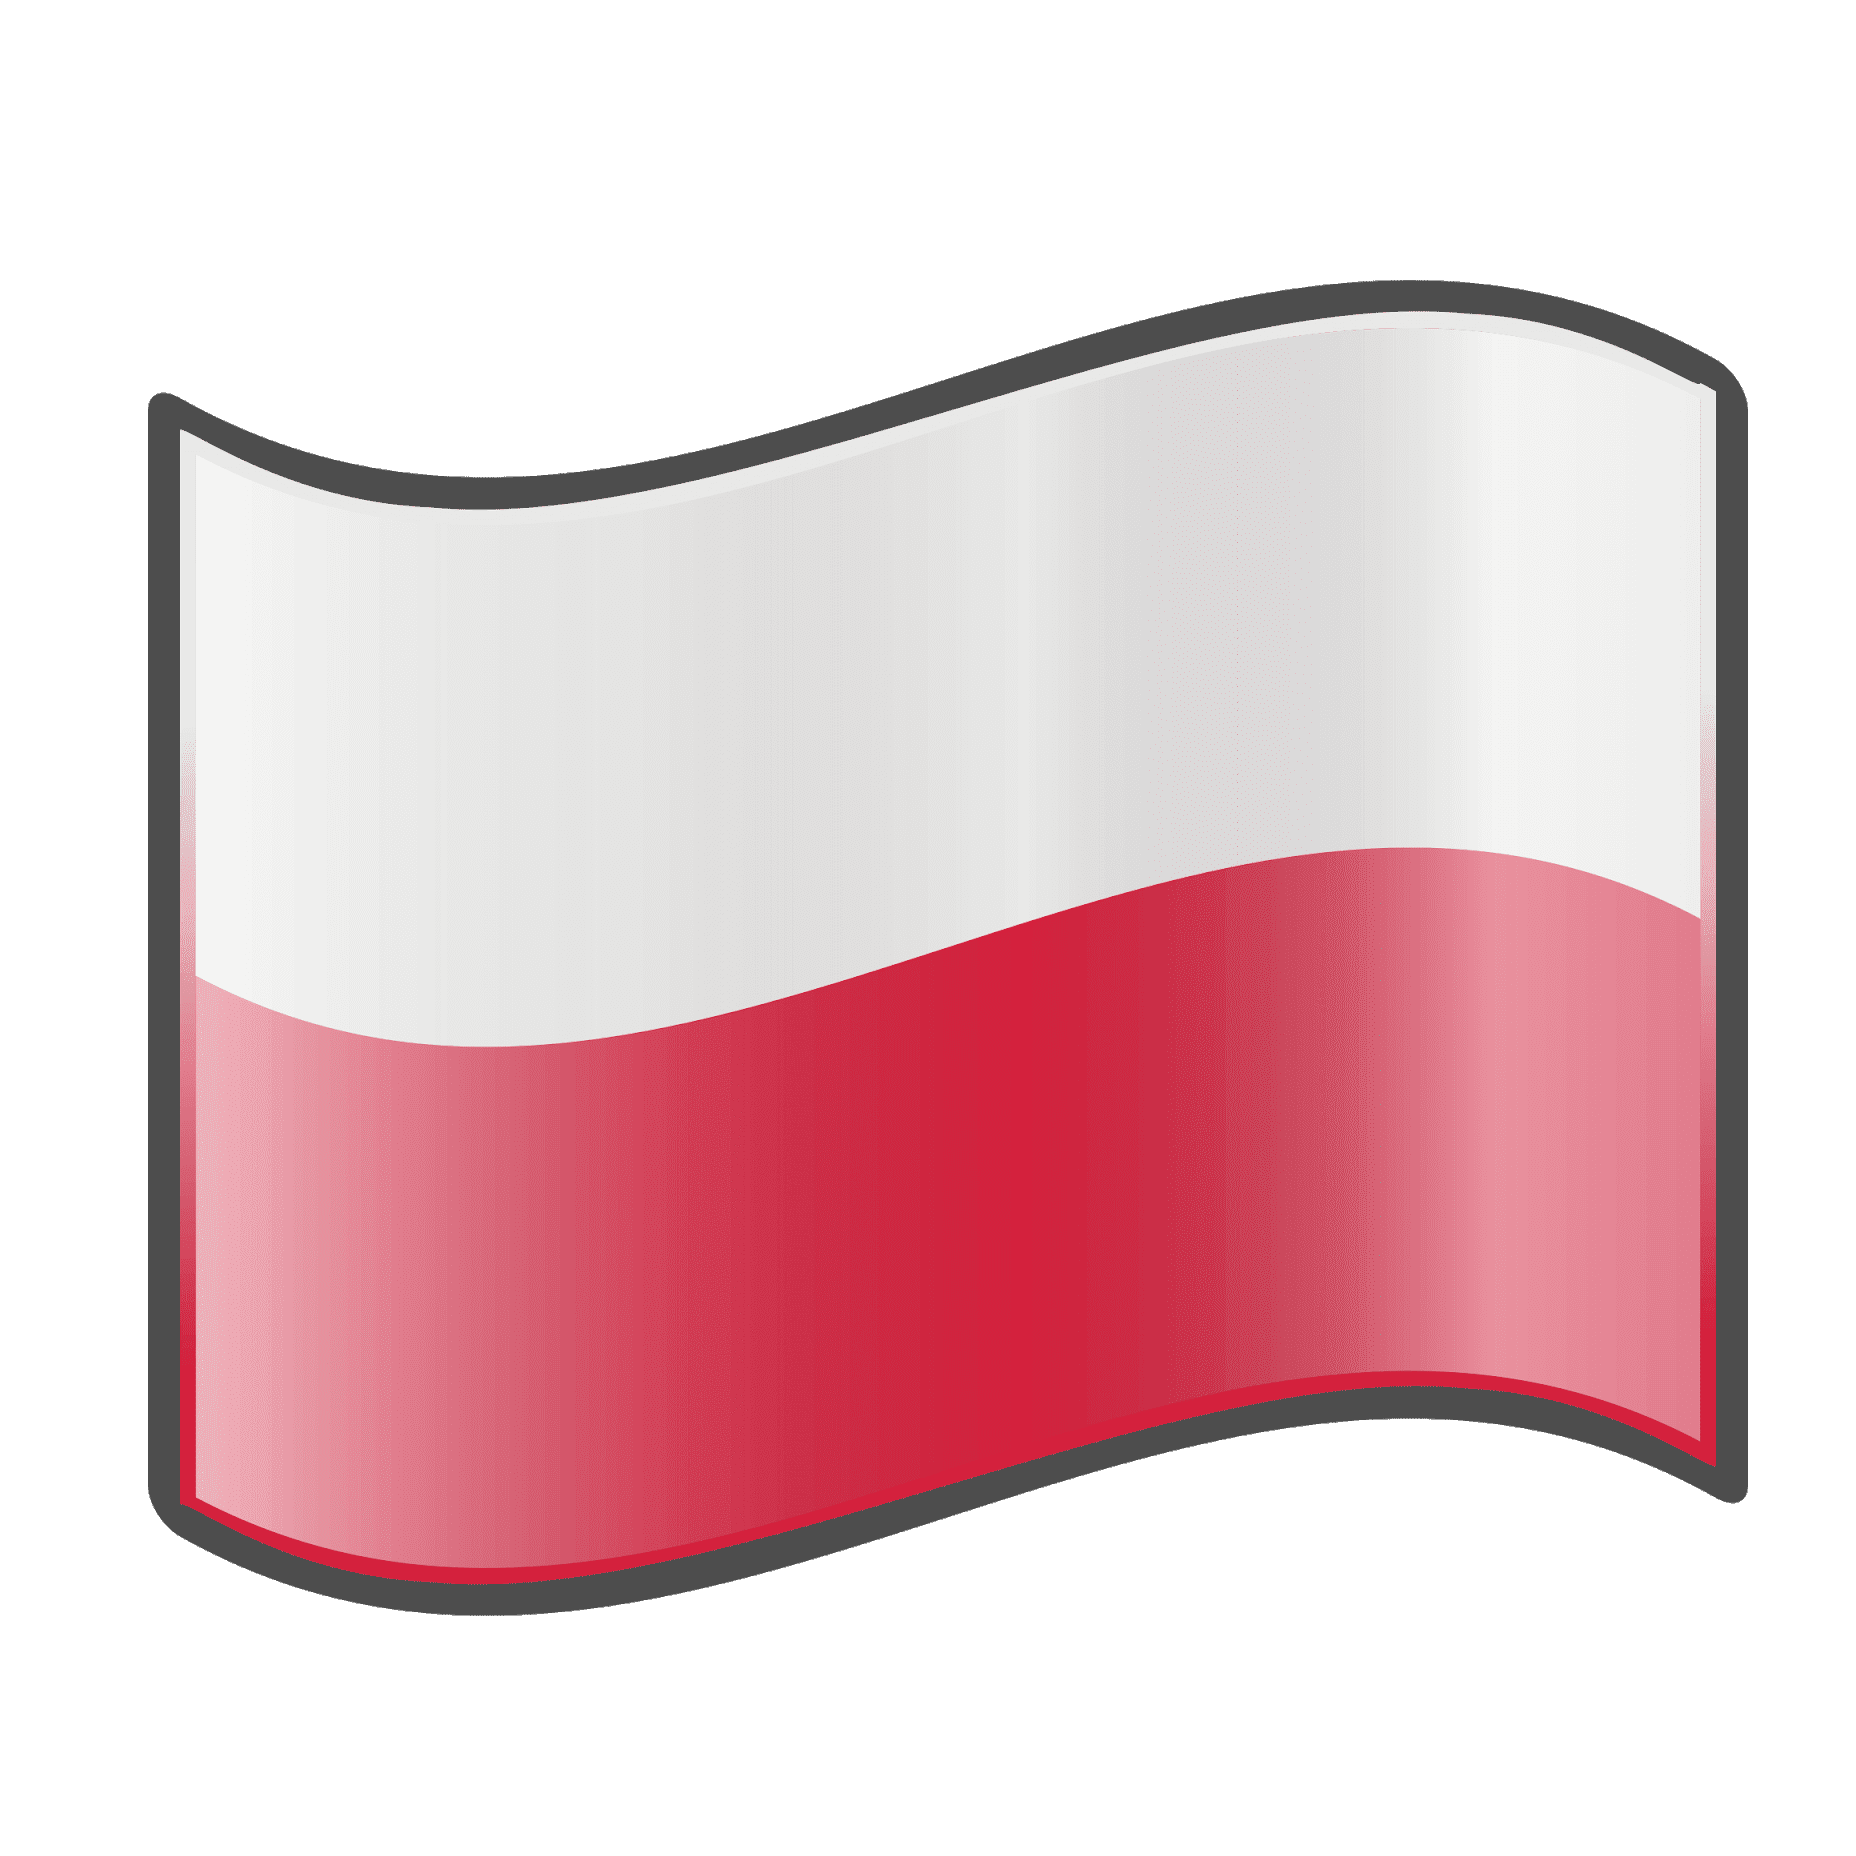 Poland Flag PNG HD